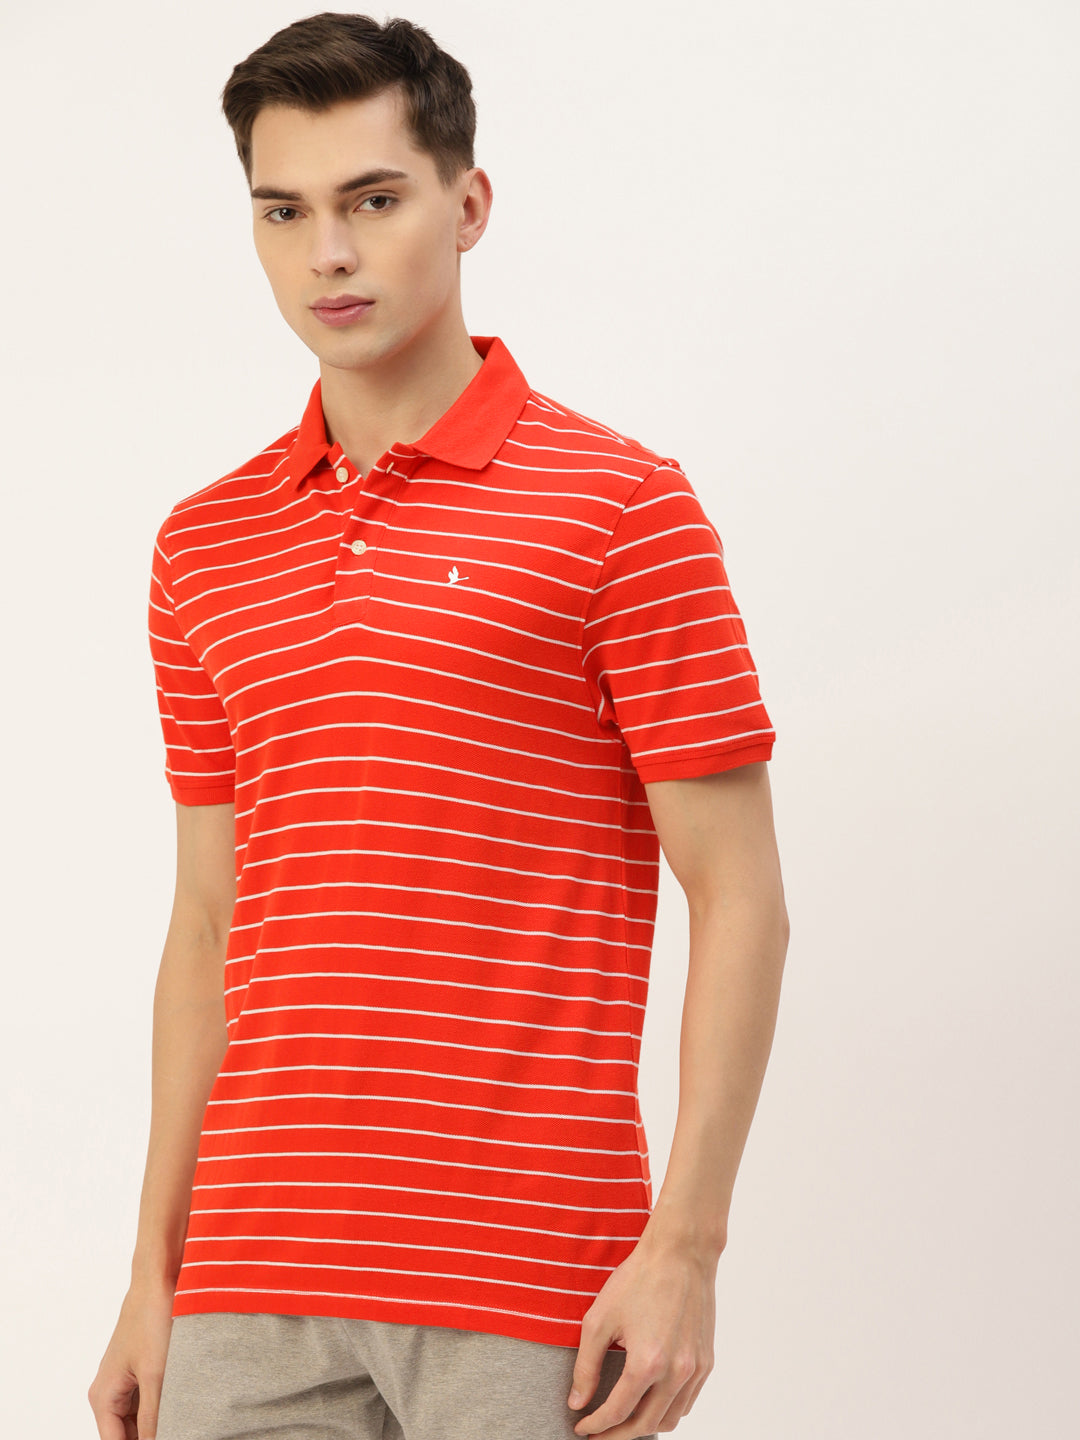 Premium Red Striped Half Sleeve Polo